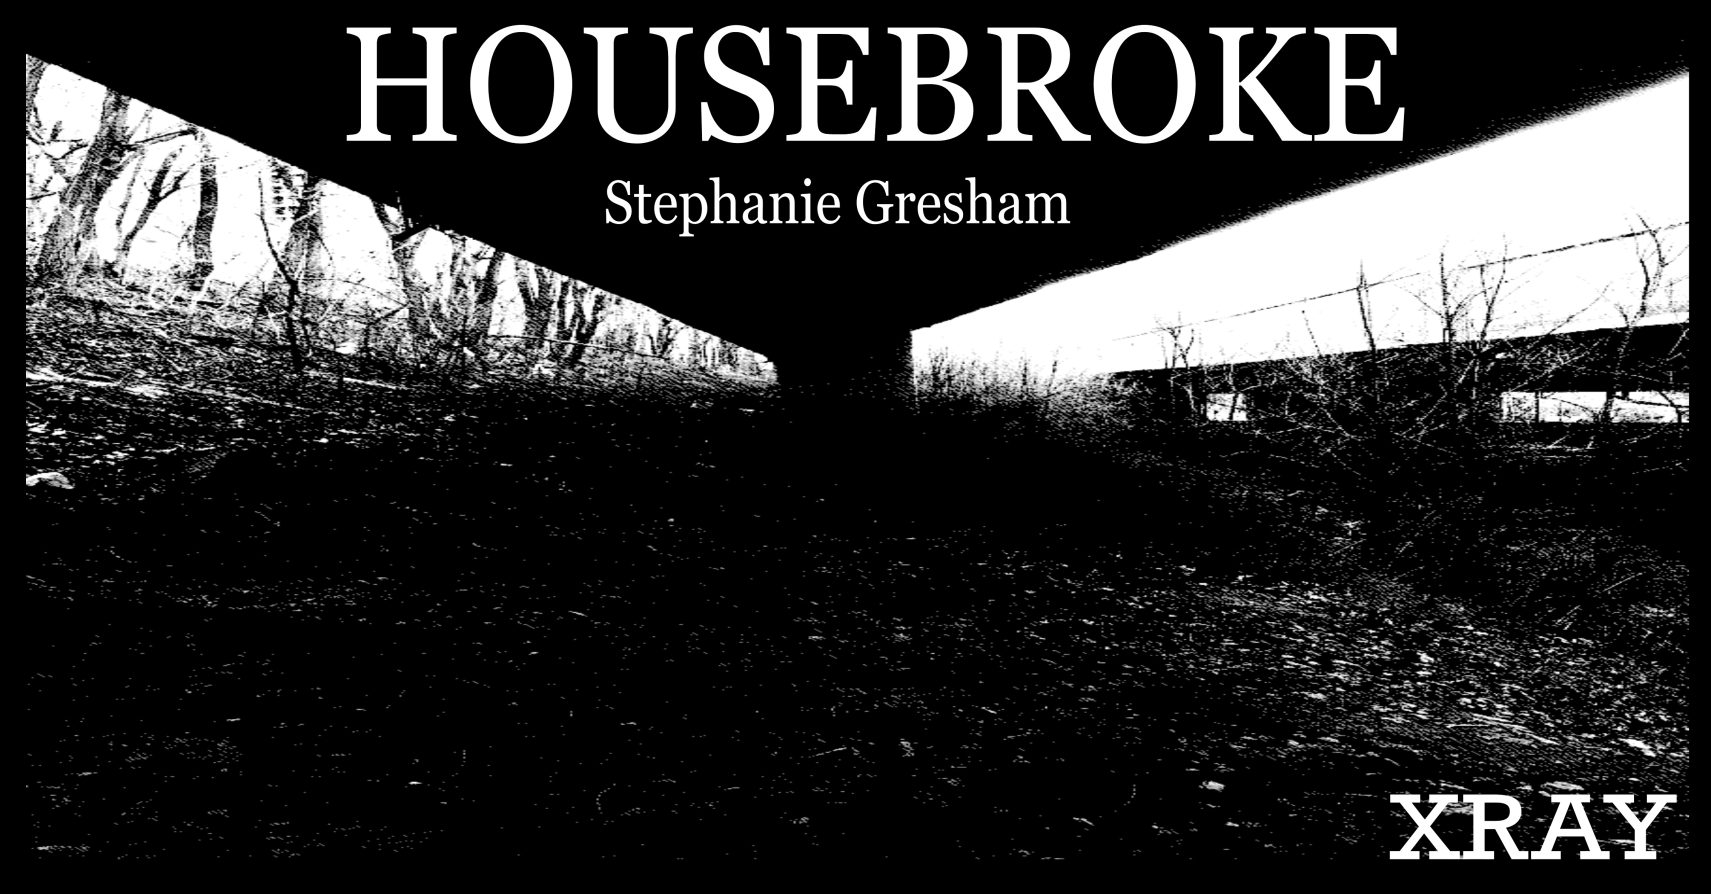 HOUSEBROKE by Stephanie Gresham